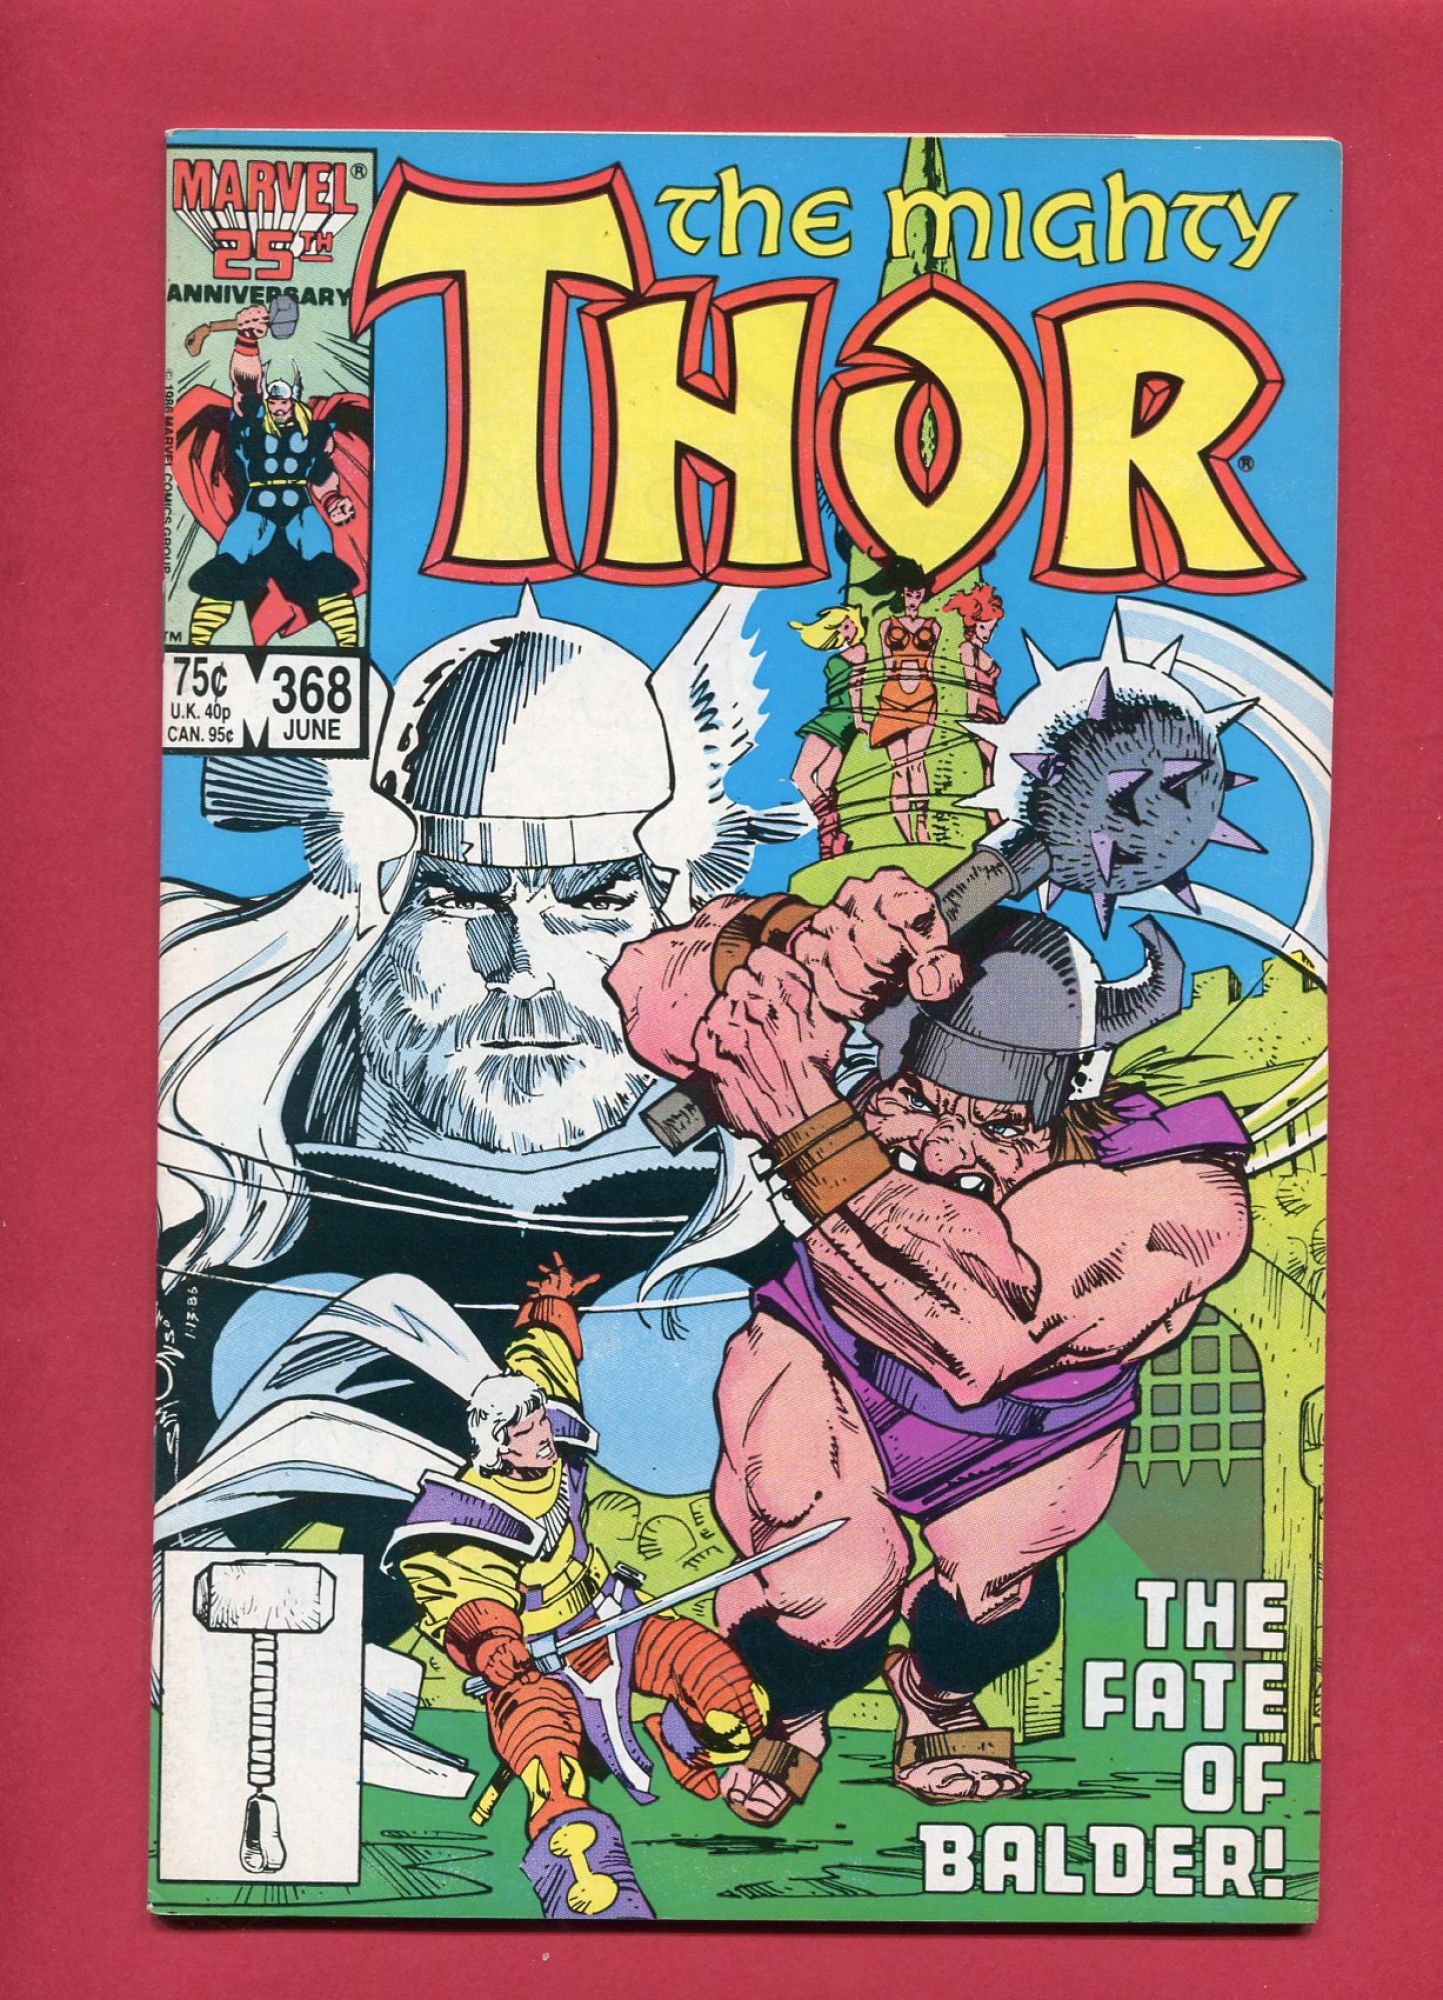 Thor #368, Jun 1986, 8.5 VF+